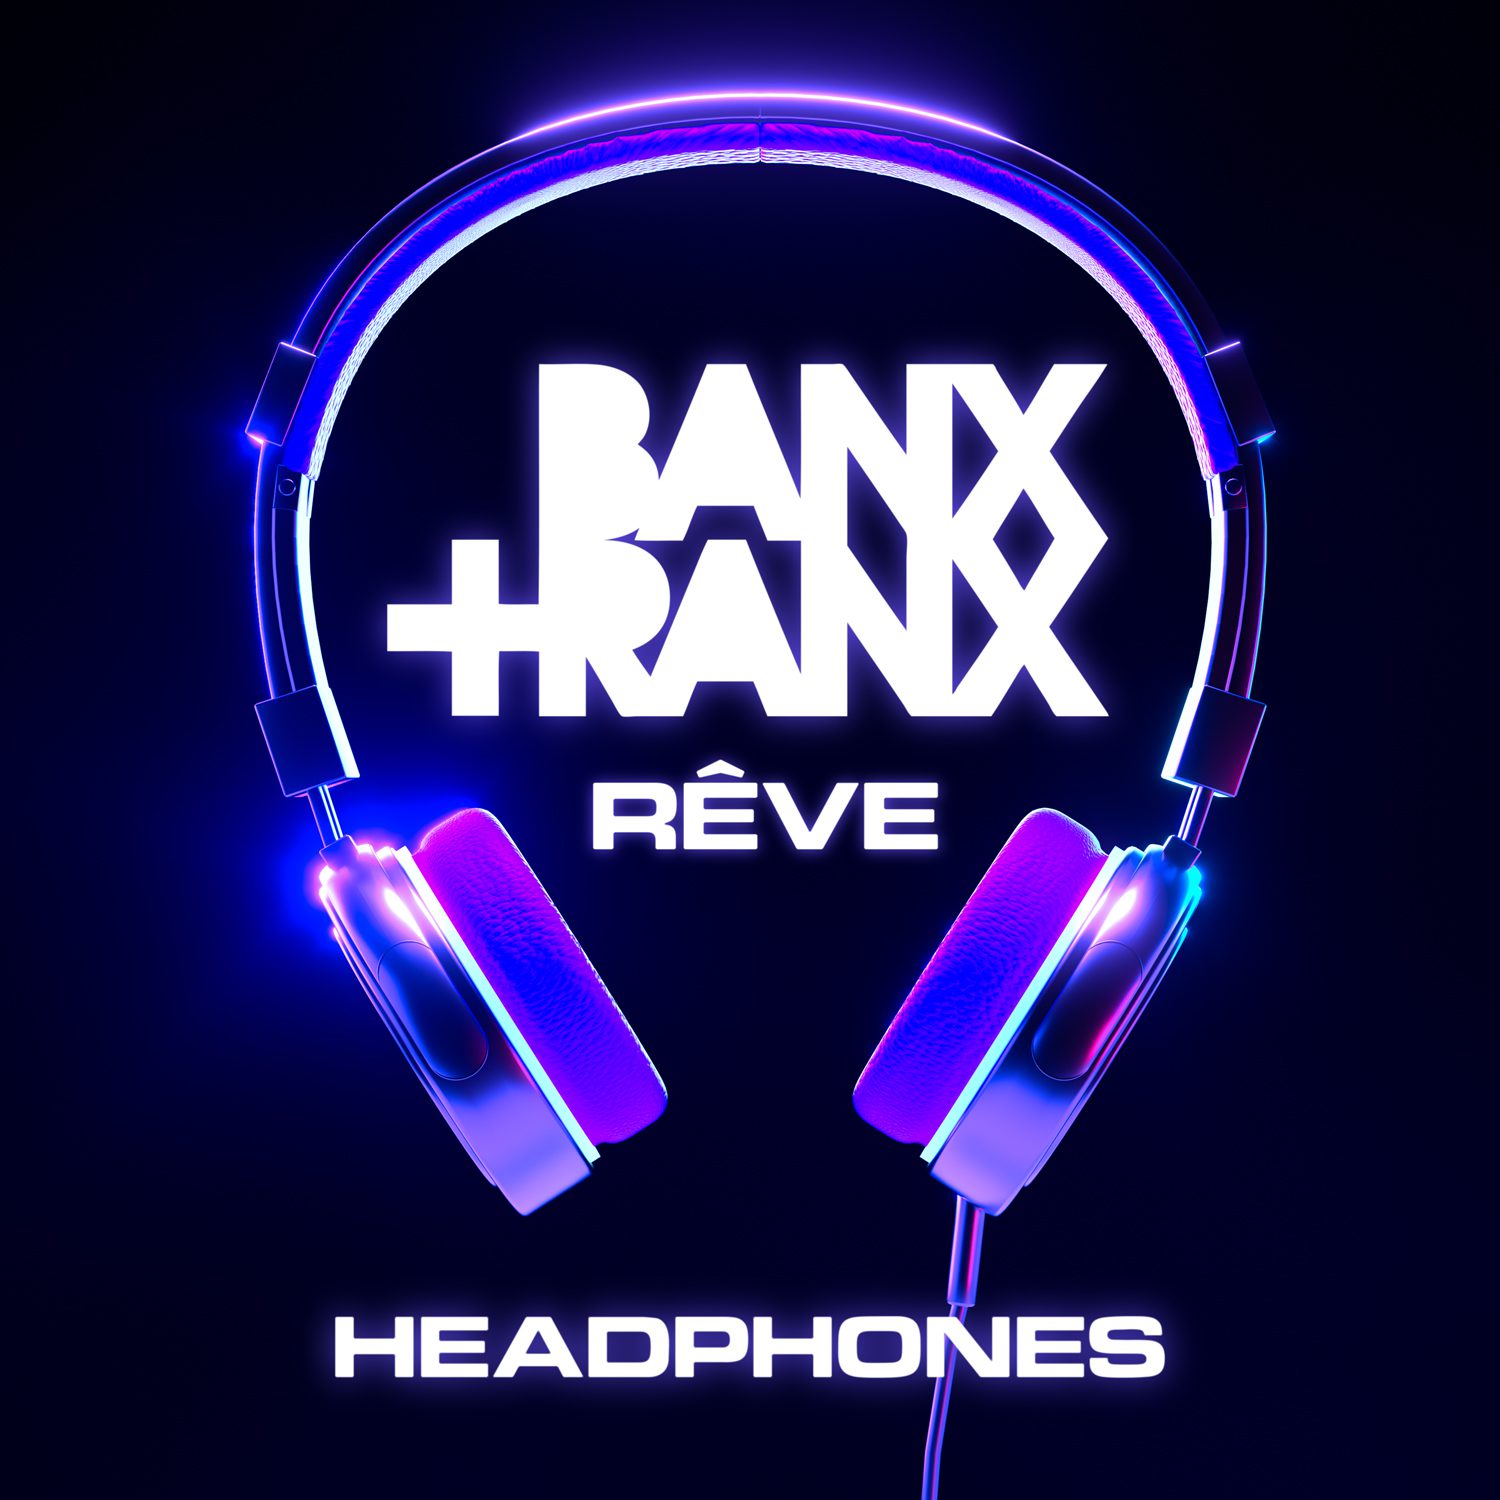 Ranx & Banx promo poster